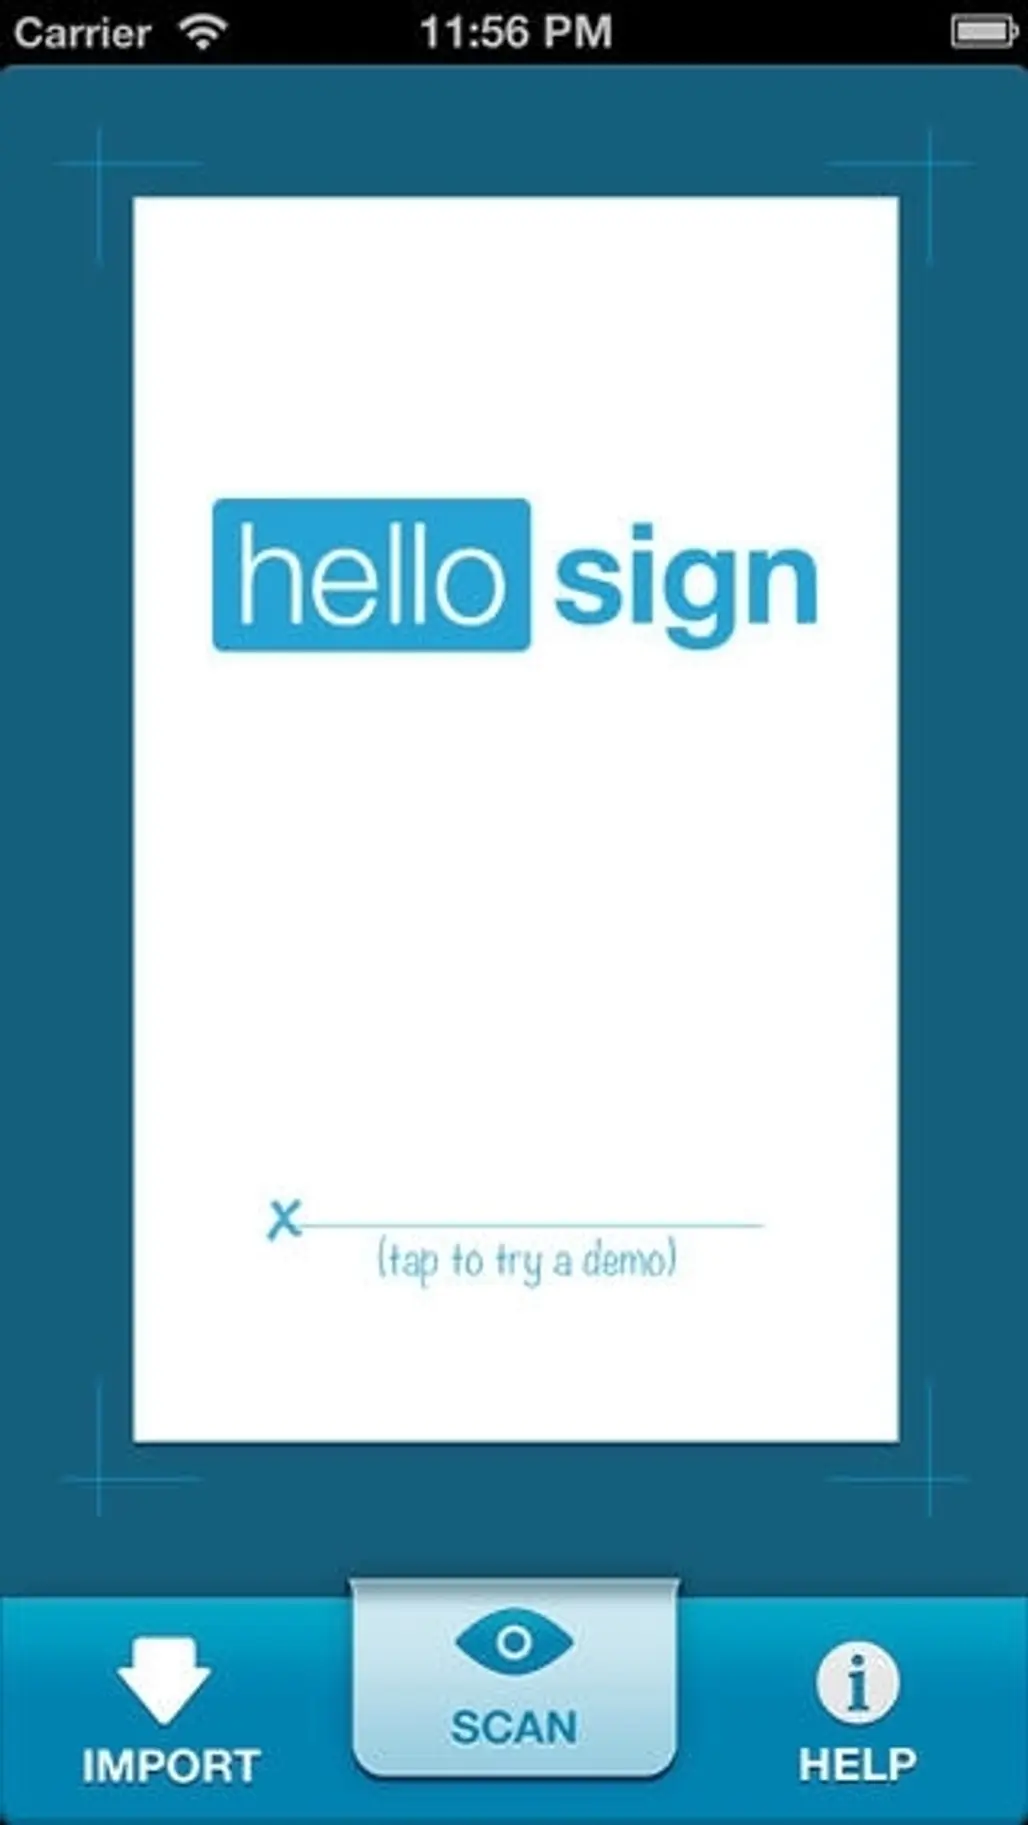 Hello Sign